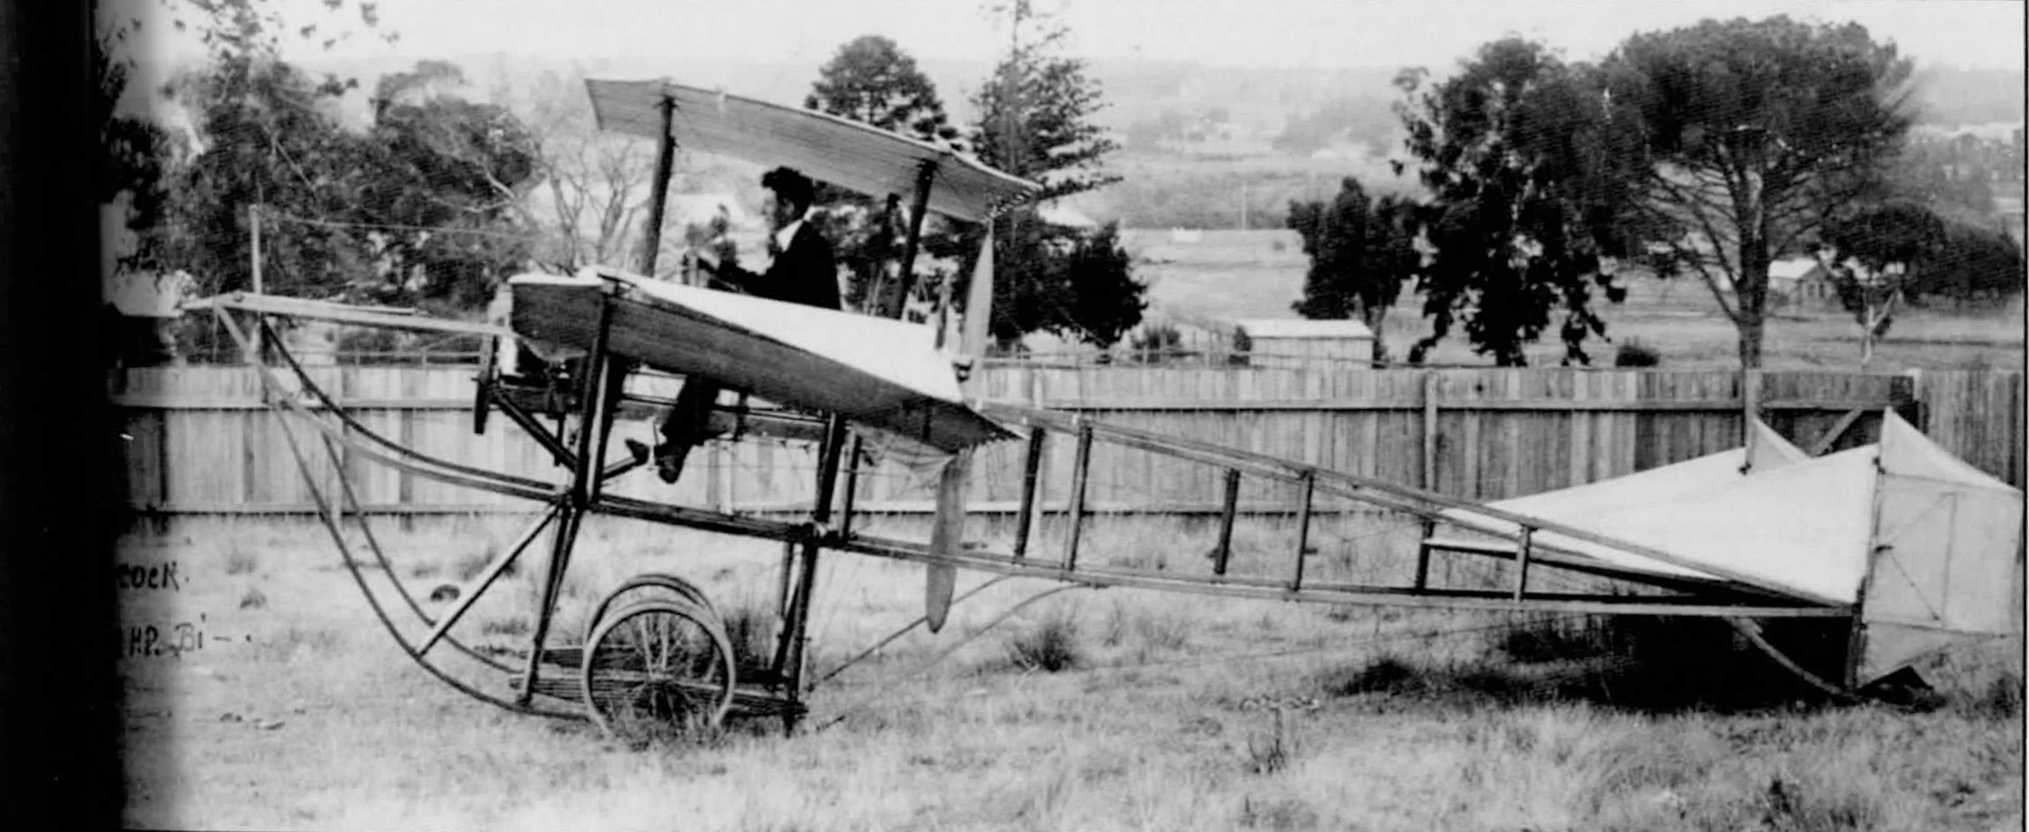 Frank Peacock's aeroplane